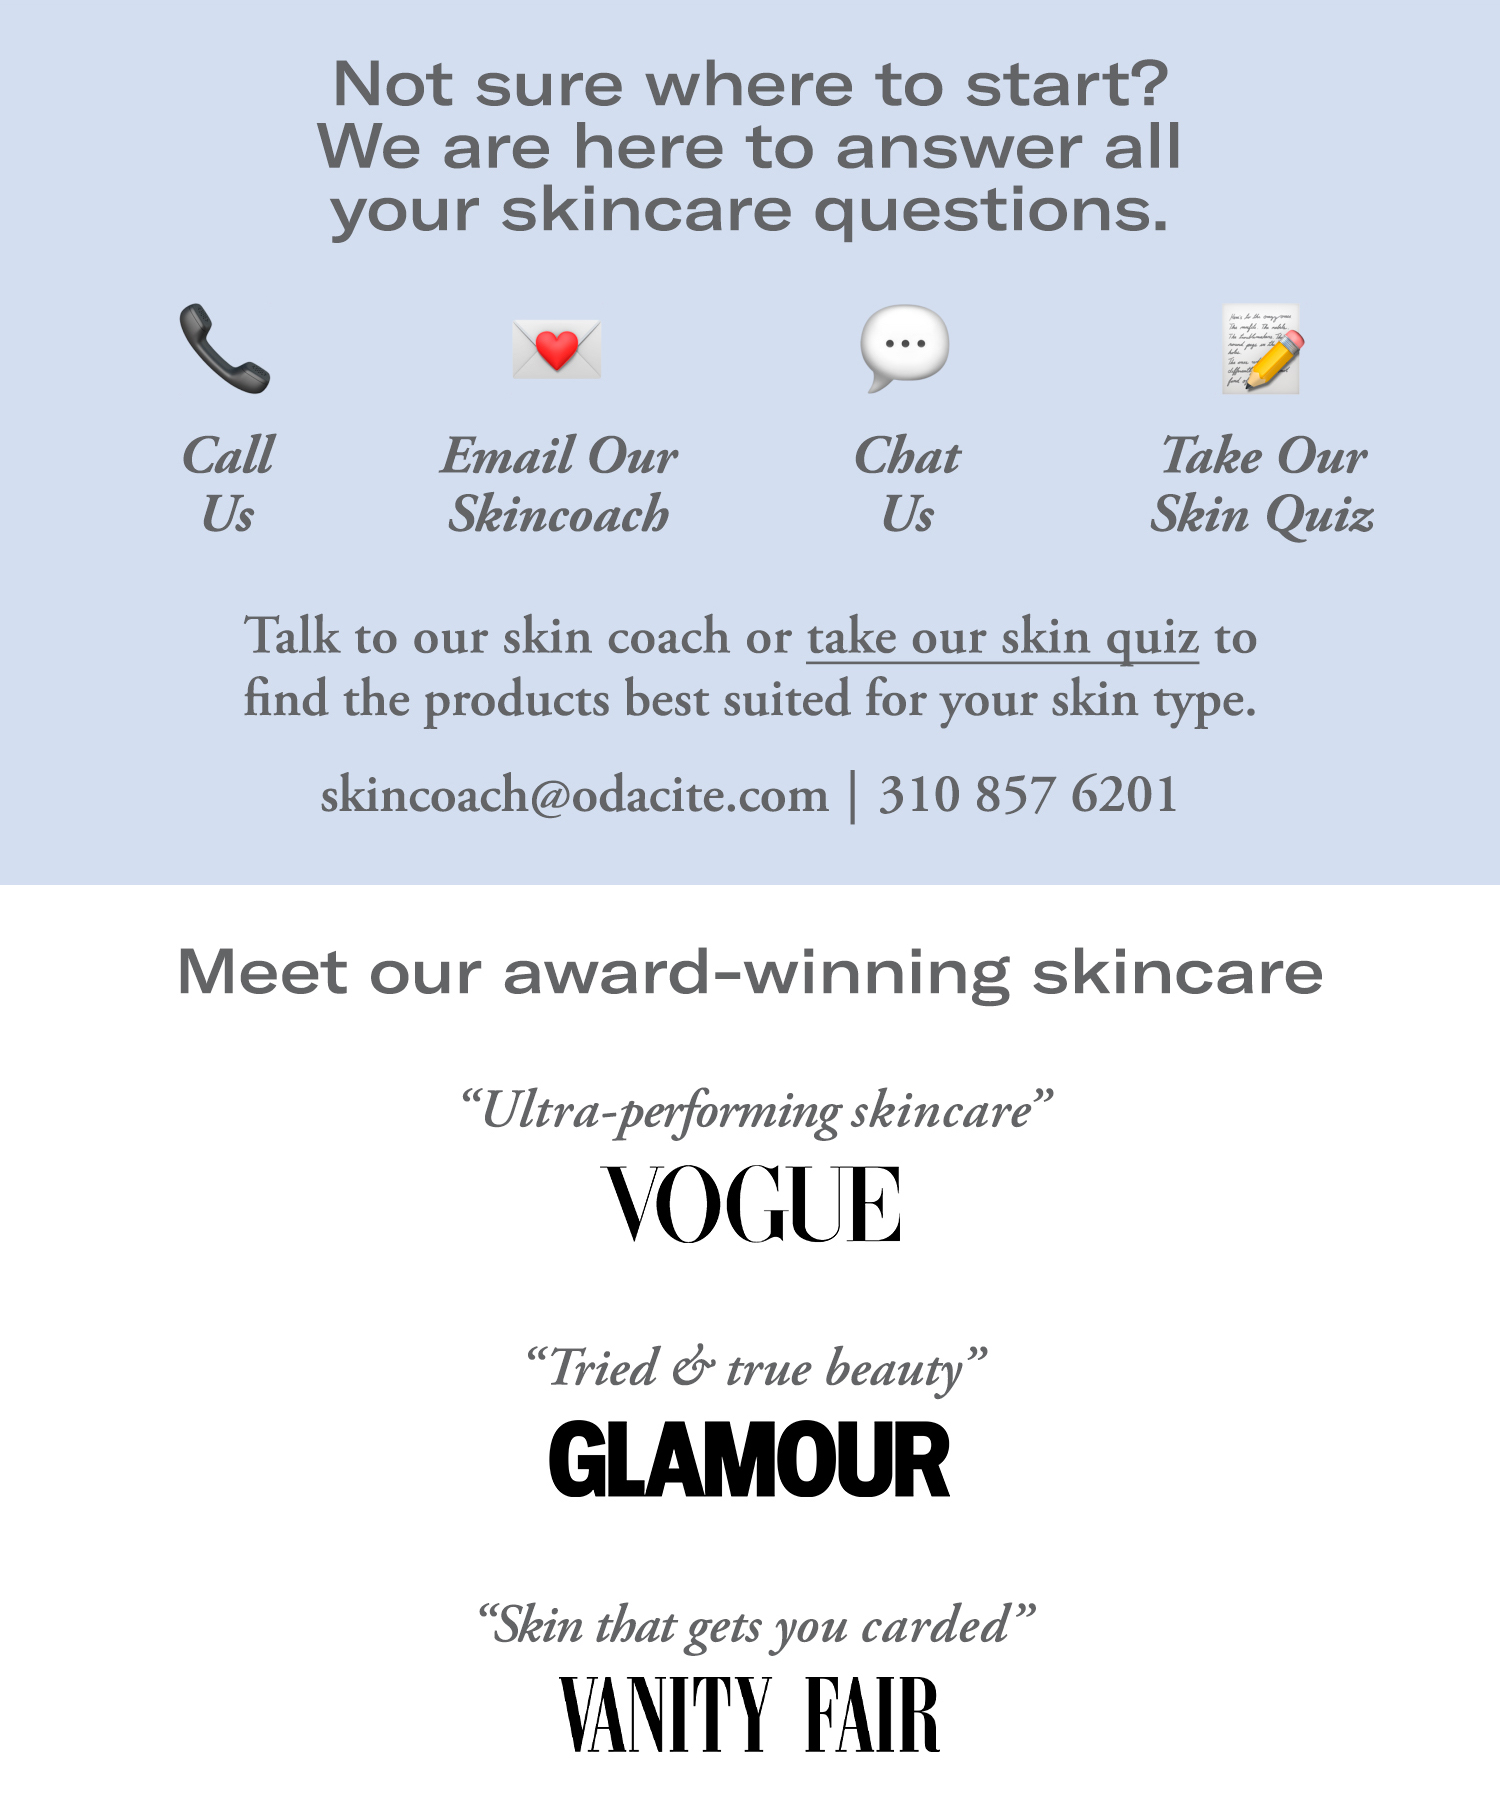 Take our skin quiz!